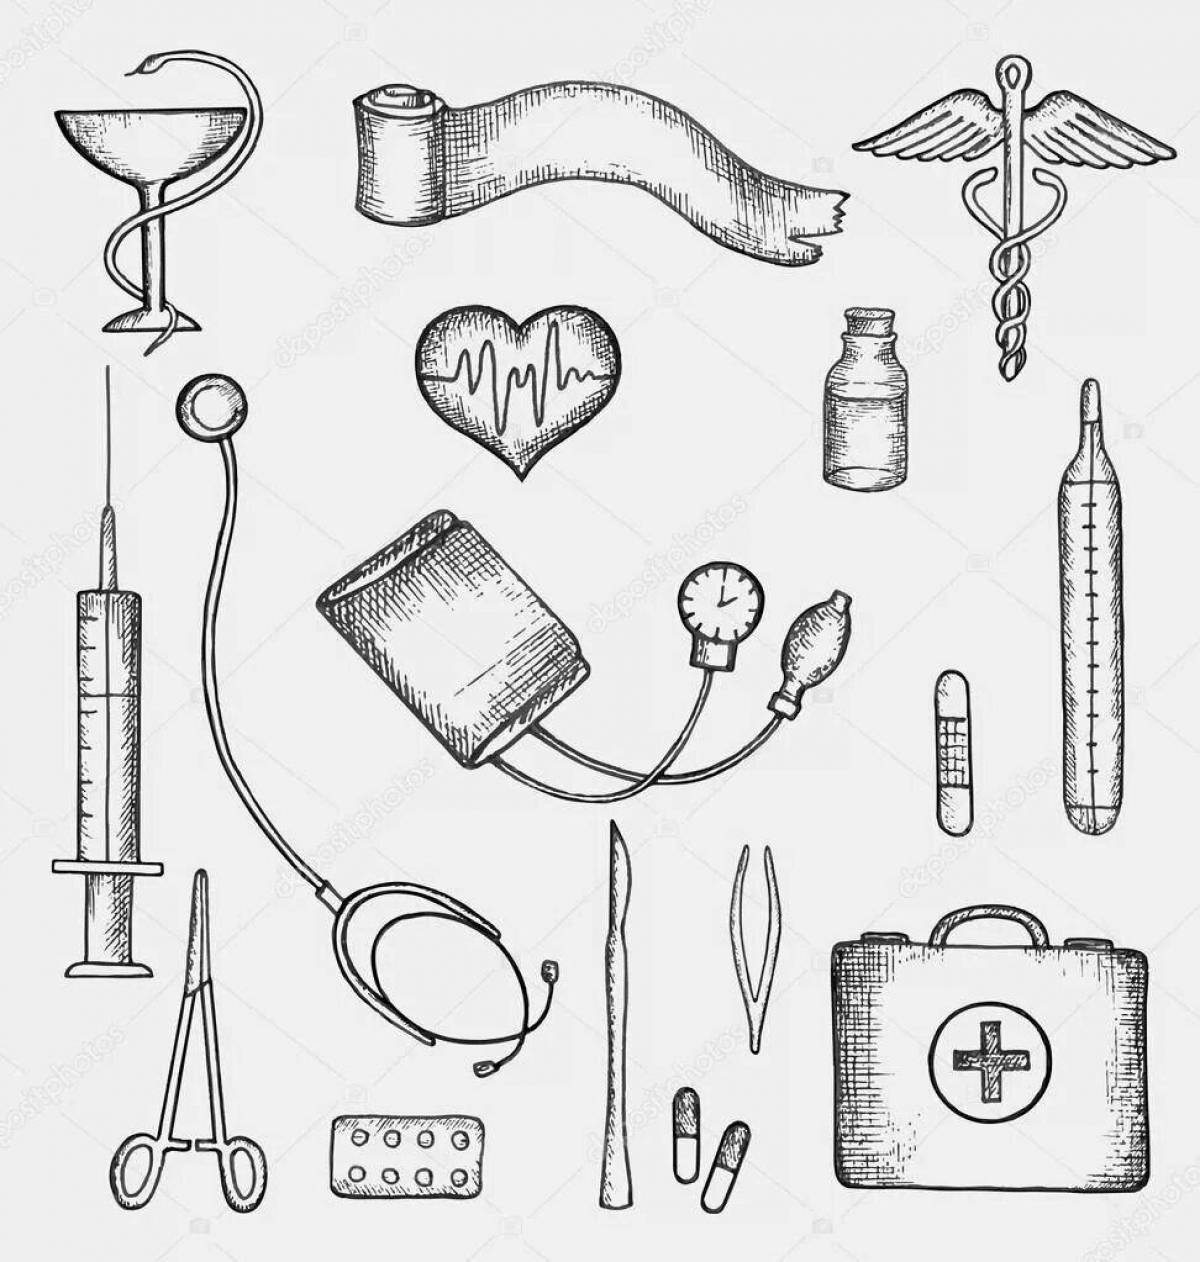 Medical instrument coloring book